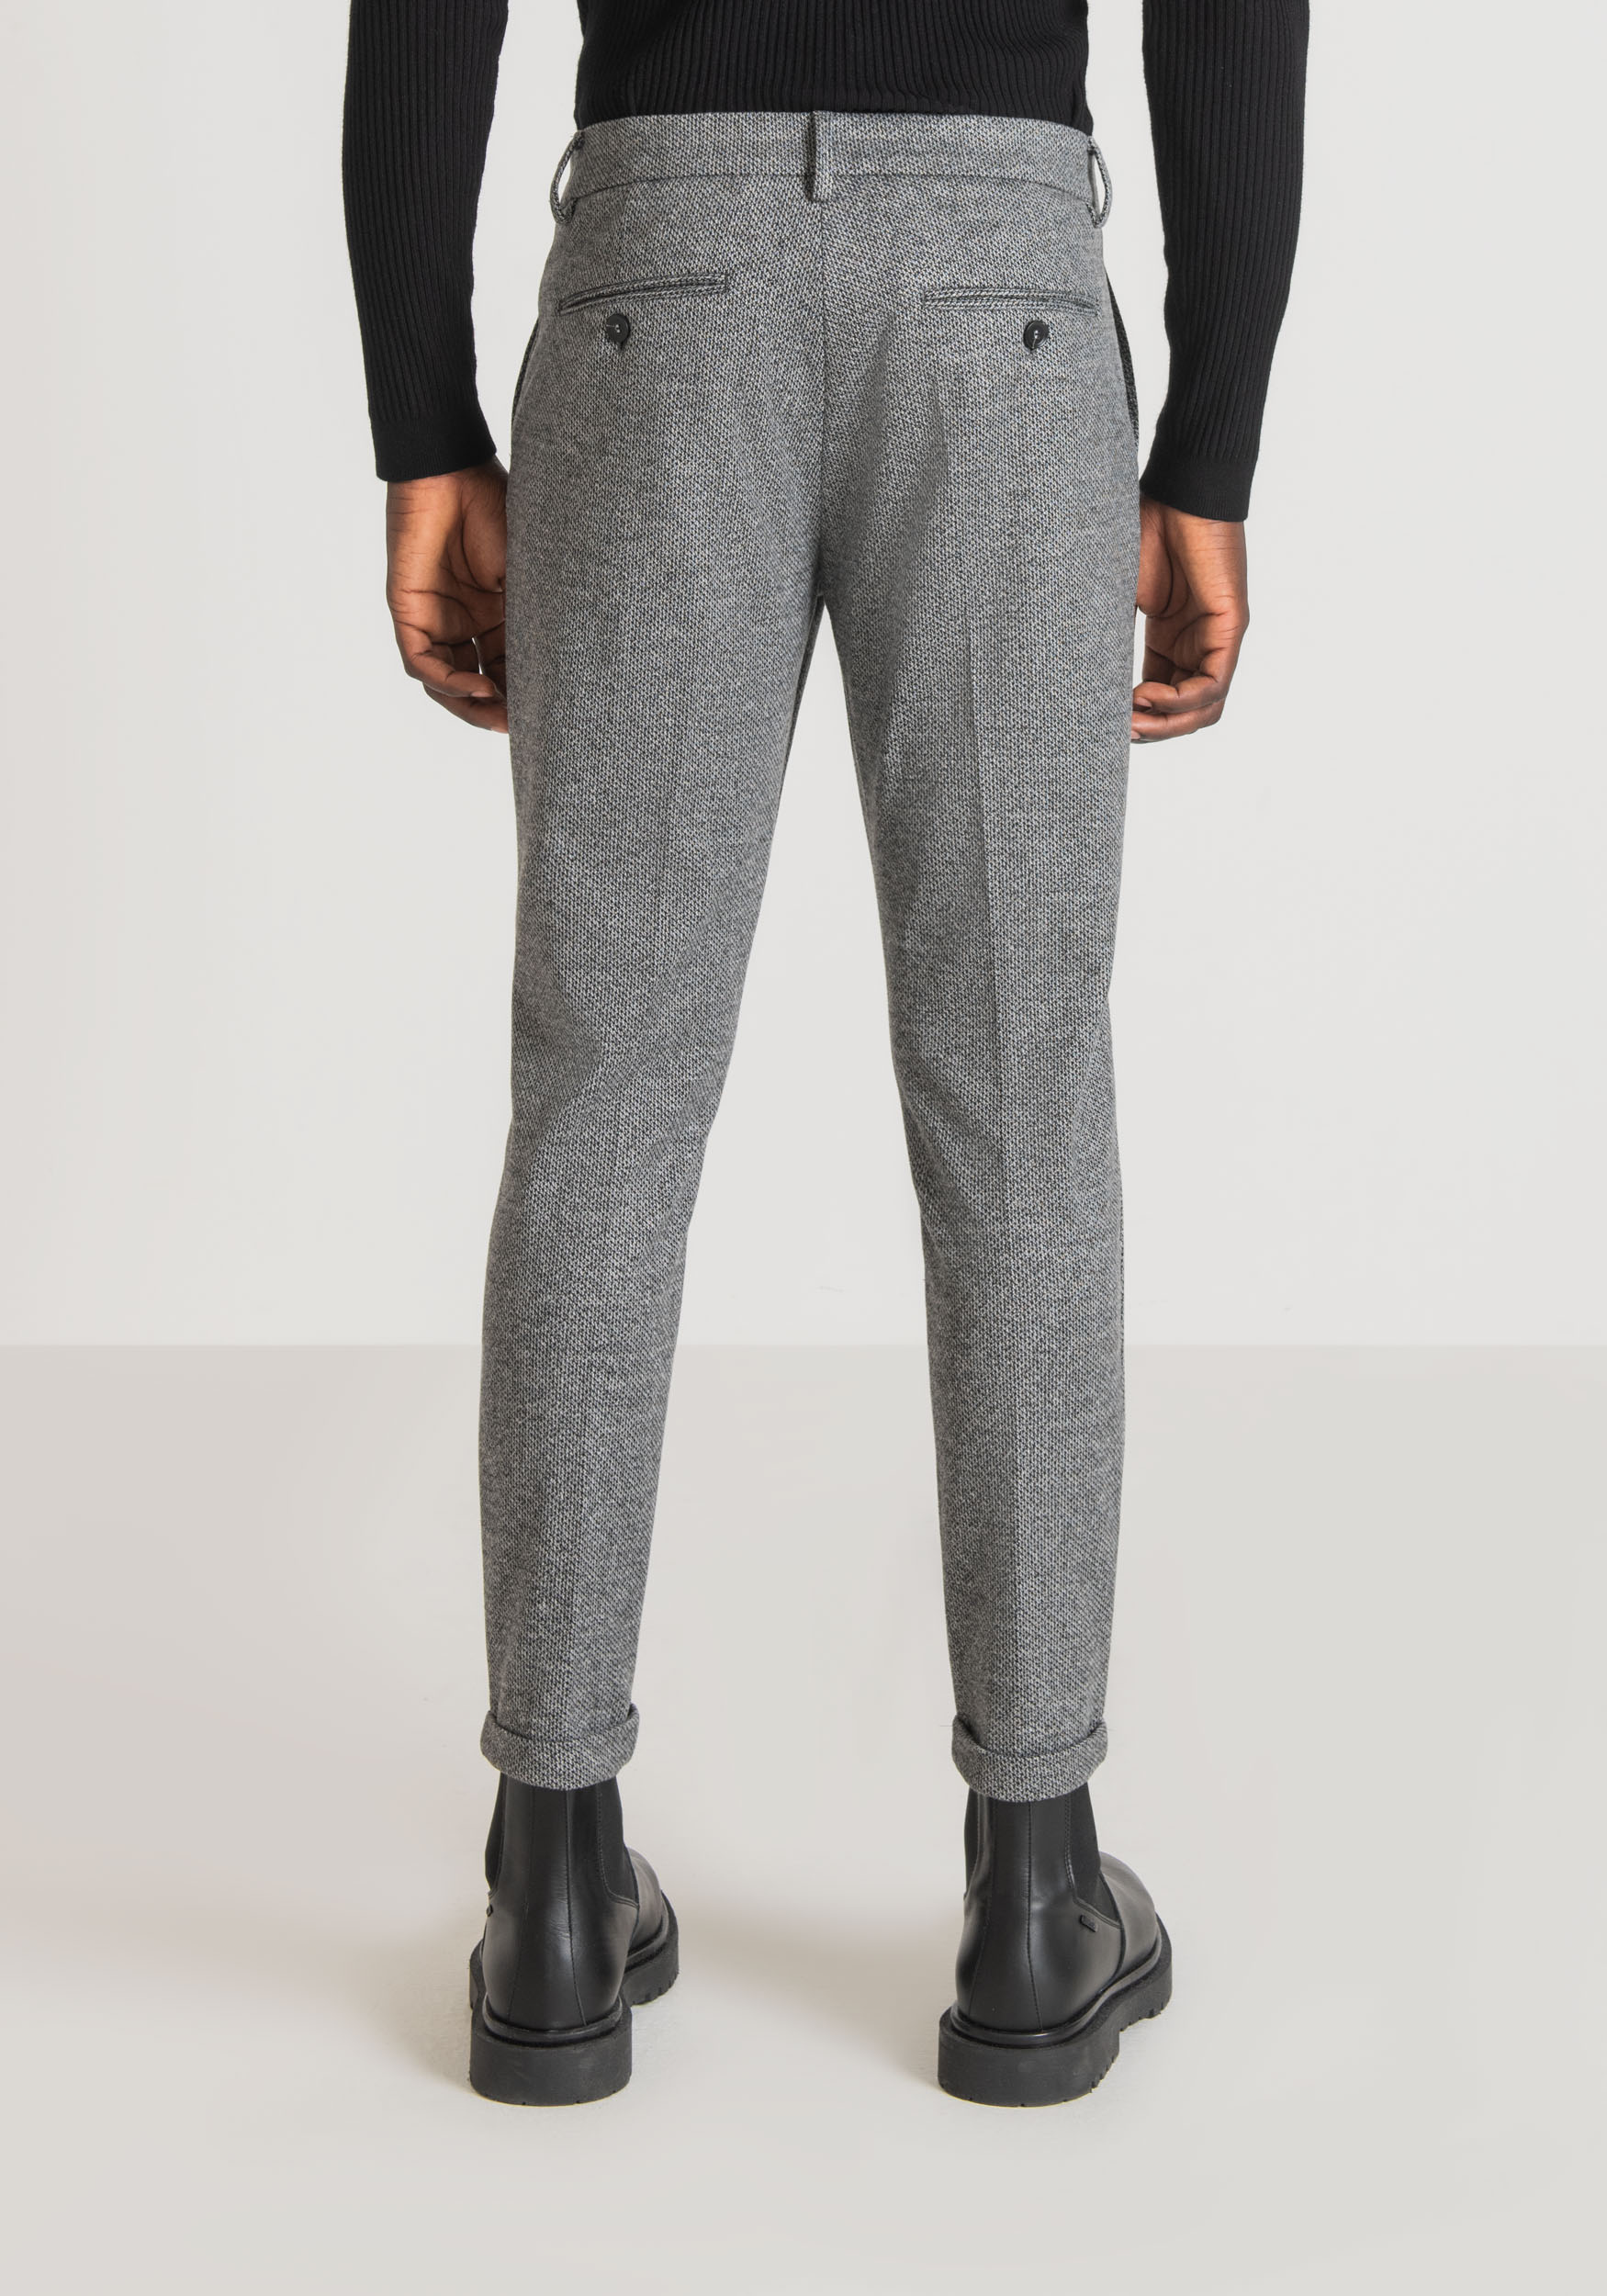 Antony Morato Pantalon Super Skinny Fit Ashe En Tissu De Viscose Melangee Elastique Chine Gris Moyen | Homme Pantalons